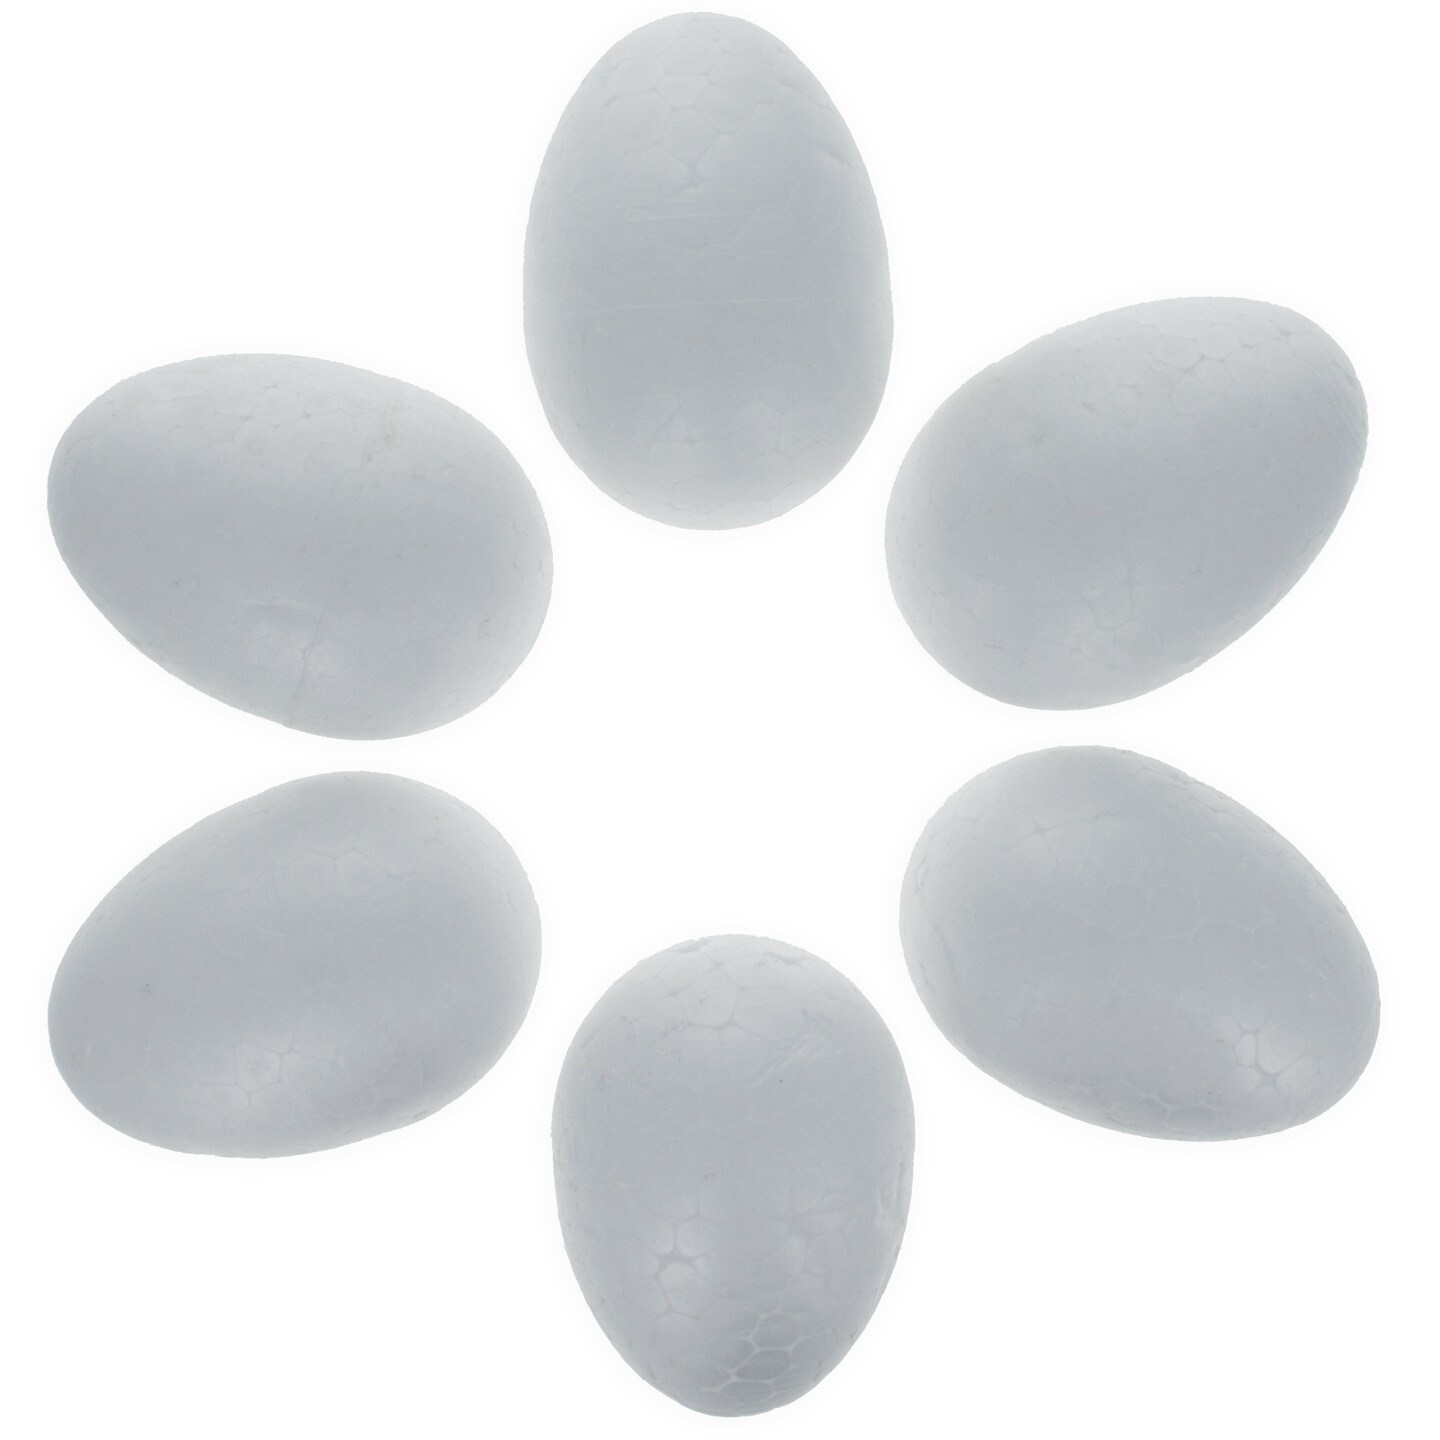 Set of 6 White Foam Eggs 2.3 Inches